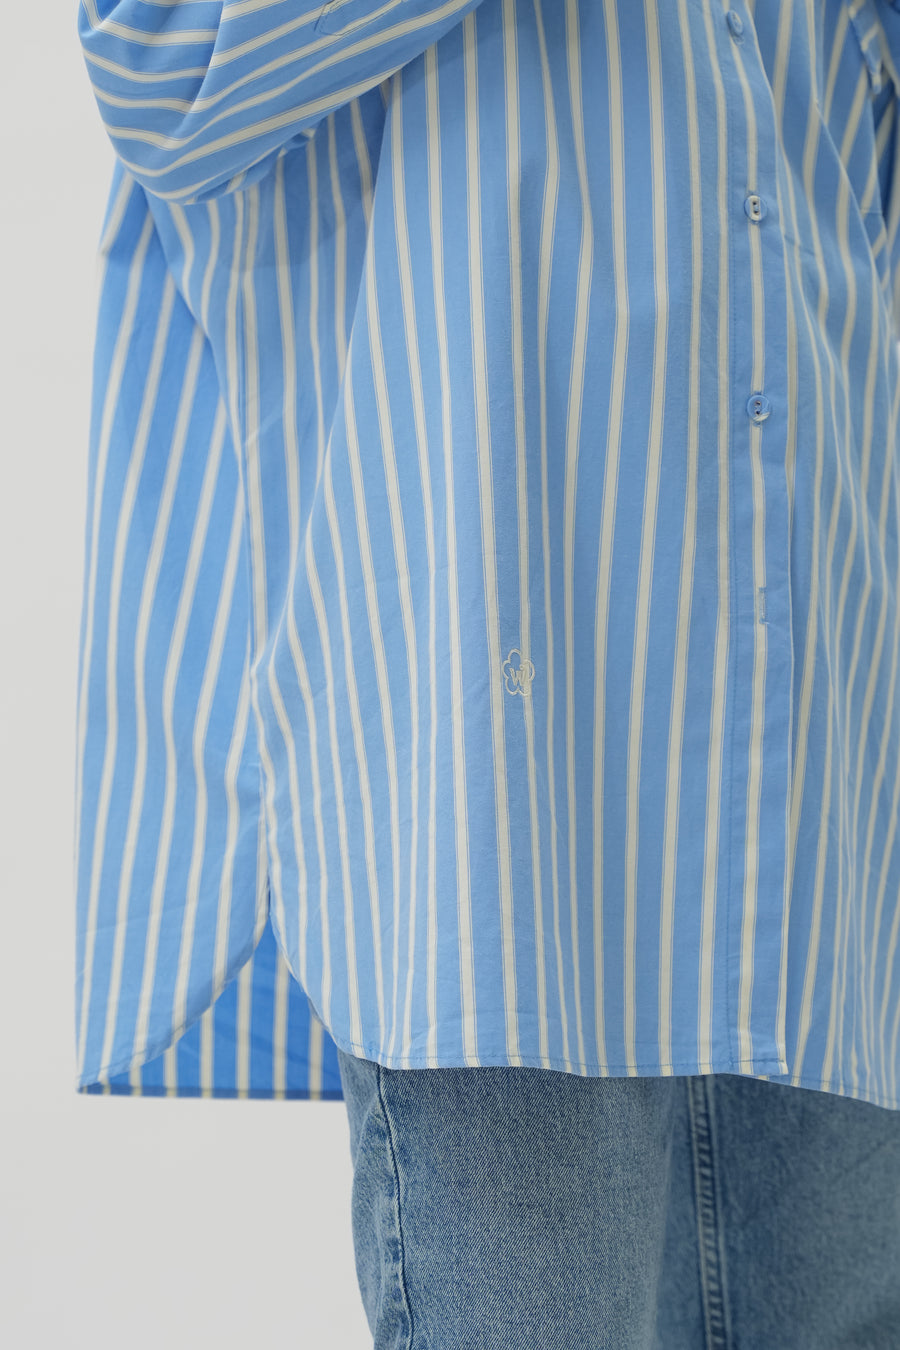 Favourite Oversized Shirt in Blue Stripe